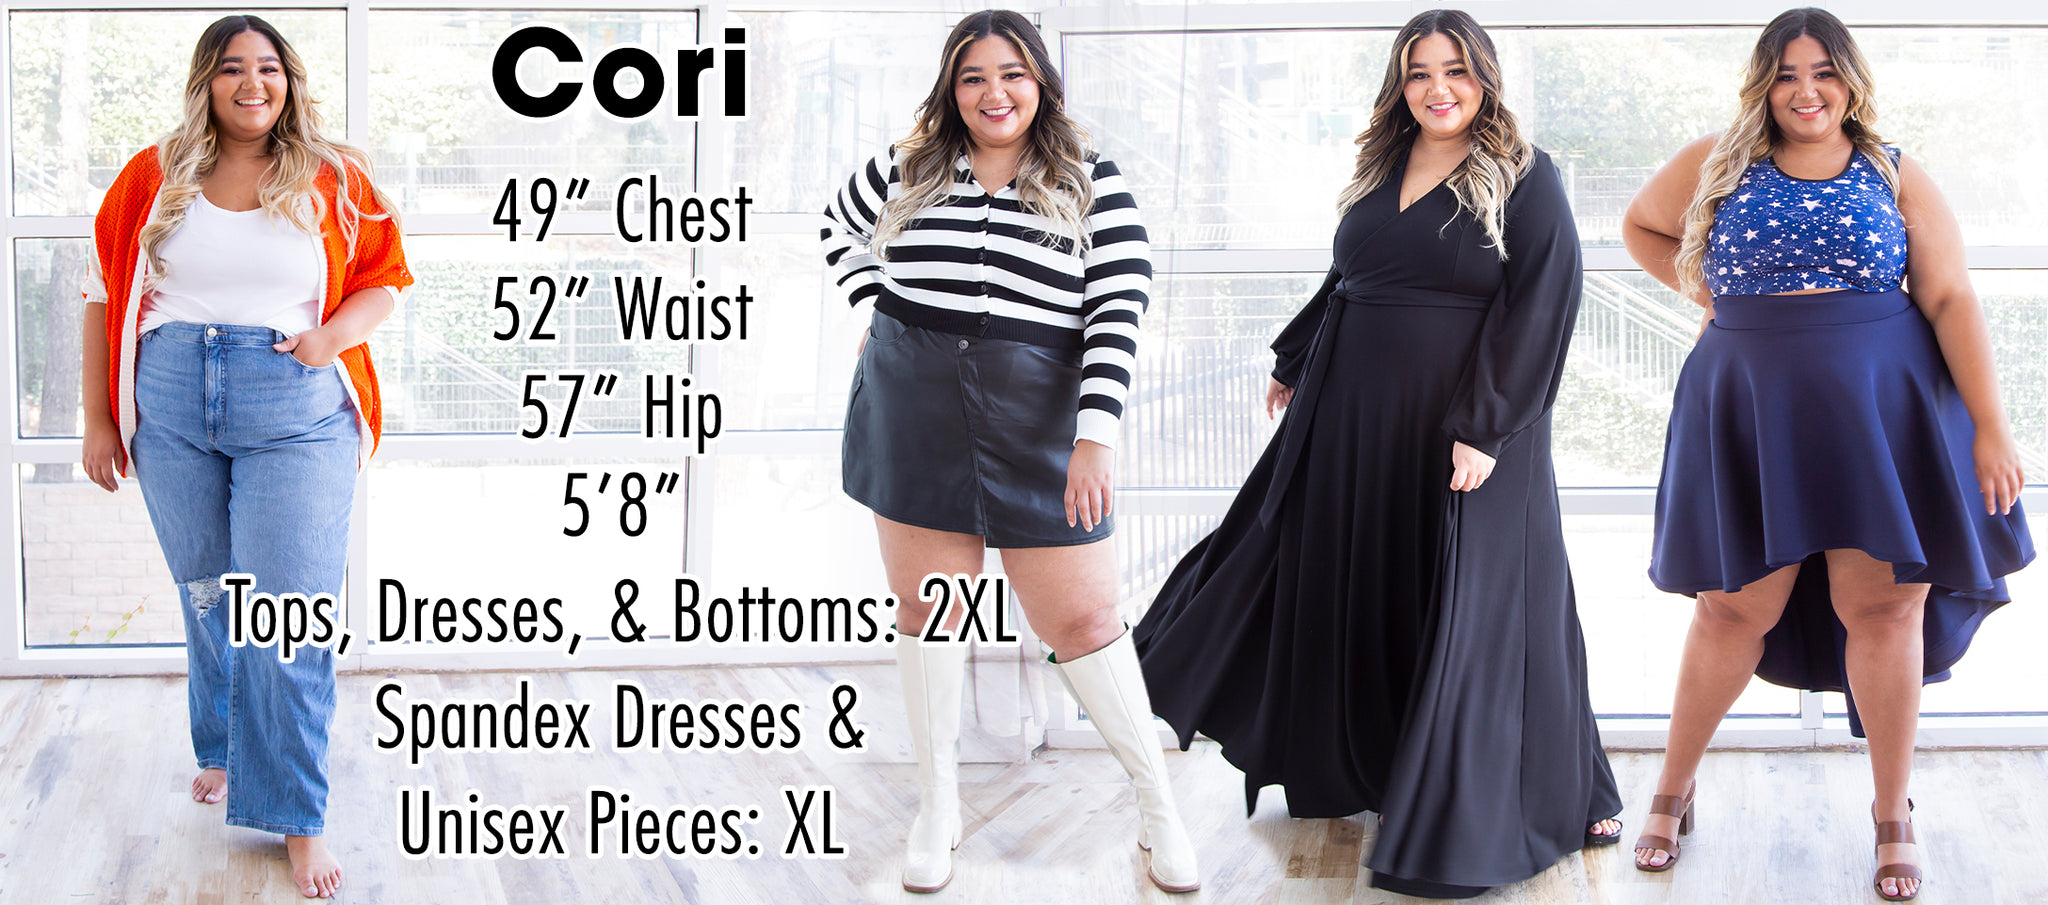 Cori - 49" Chest, 52" Waist, 57" Hips, 5'8". Tops, Bottoms, Dresses: 2XL. Spandex Dresses and Unisex: XL